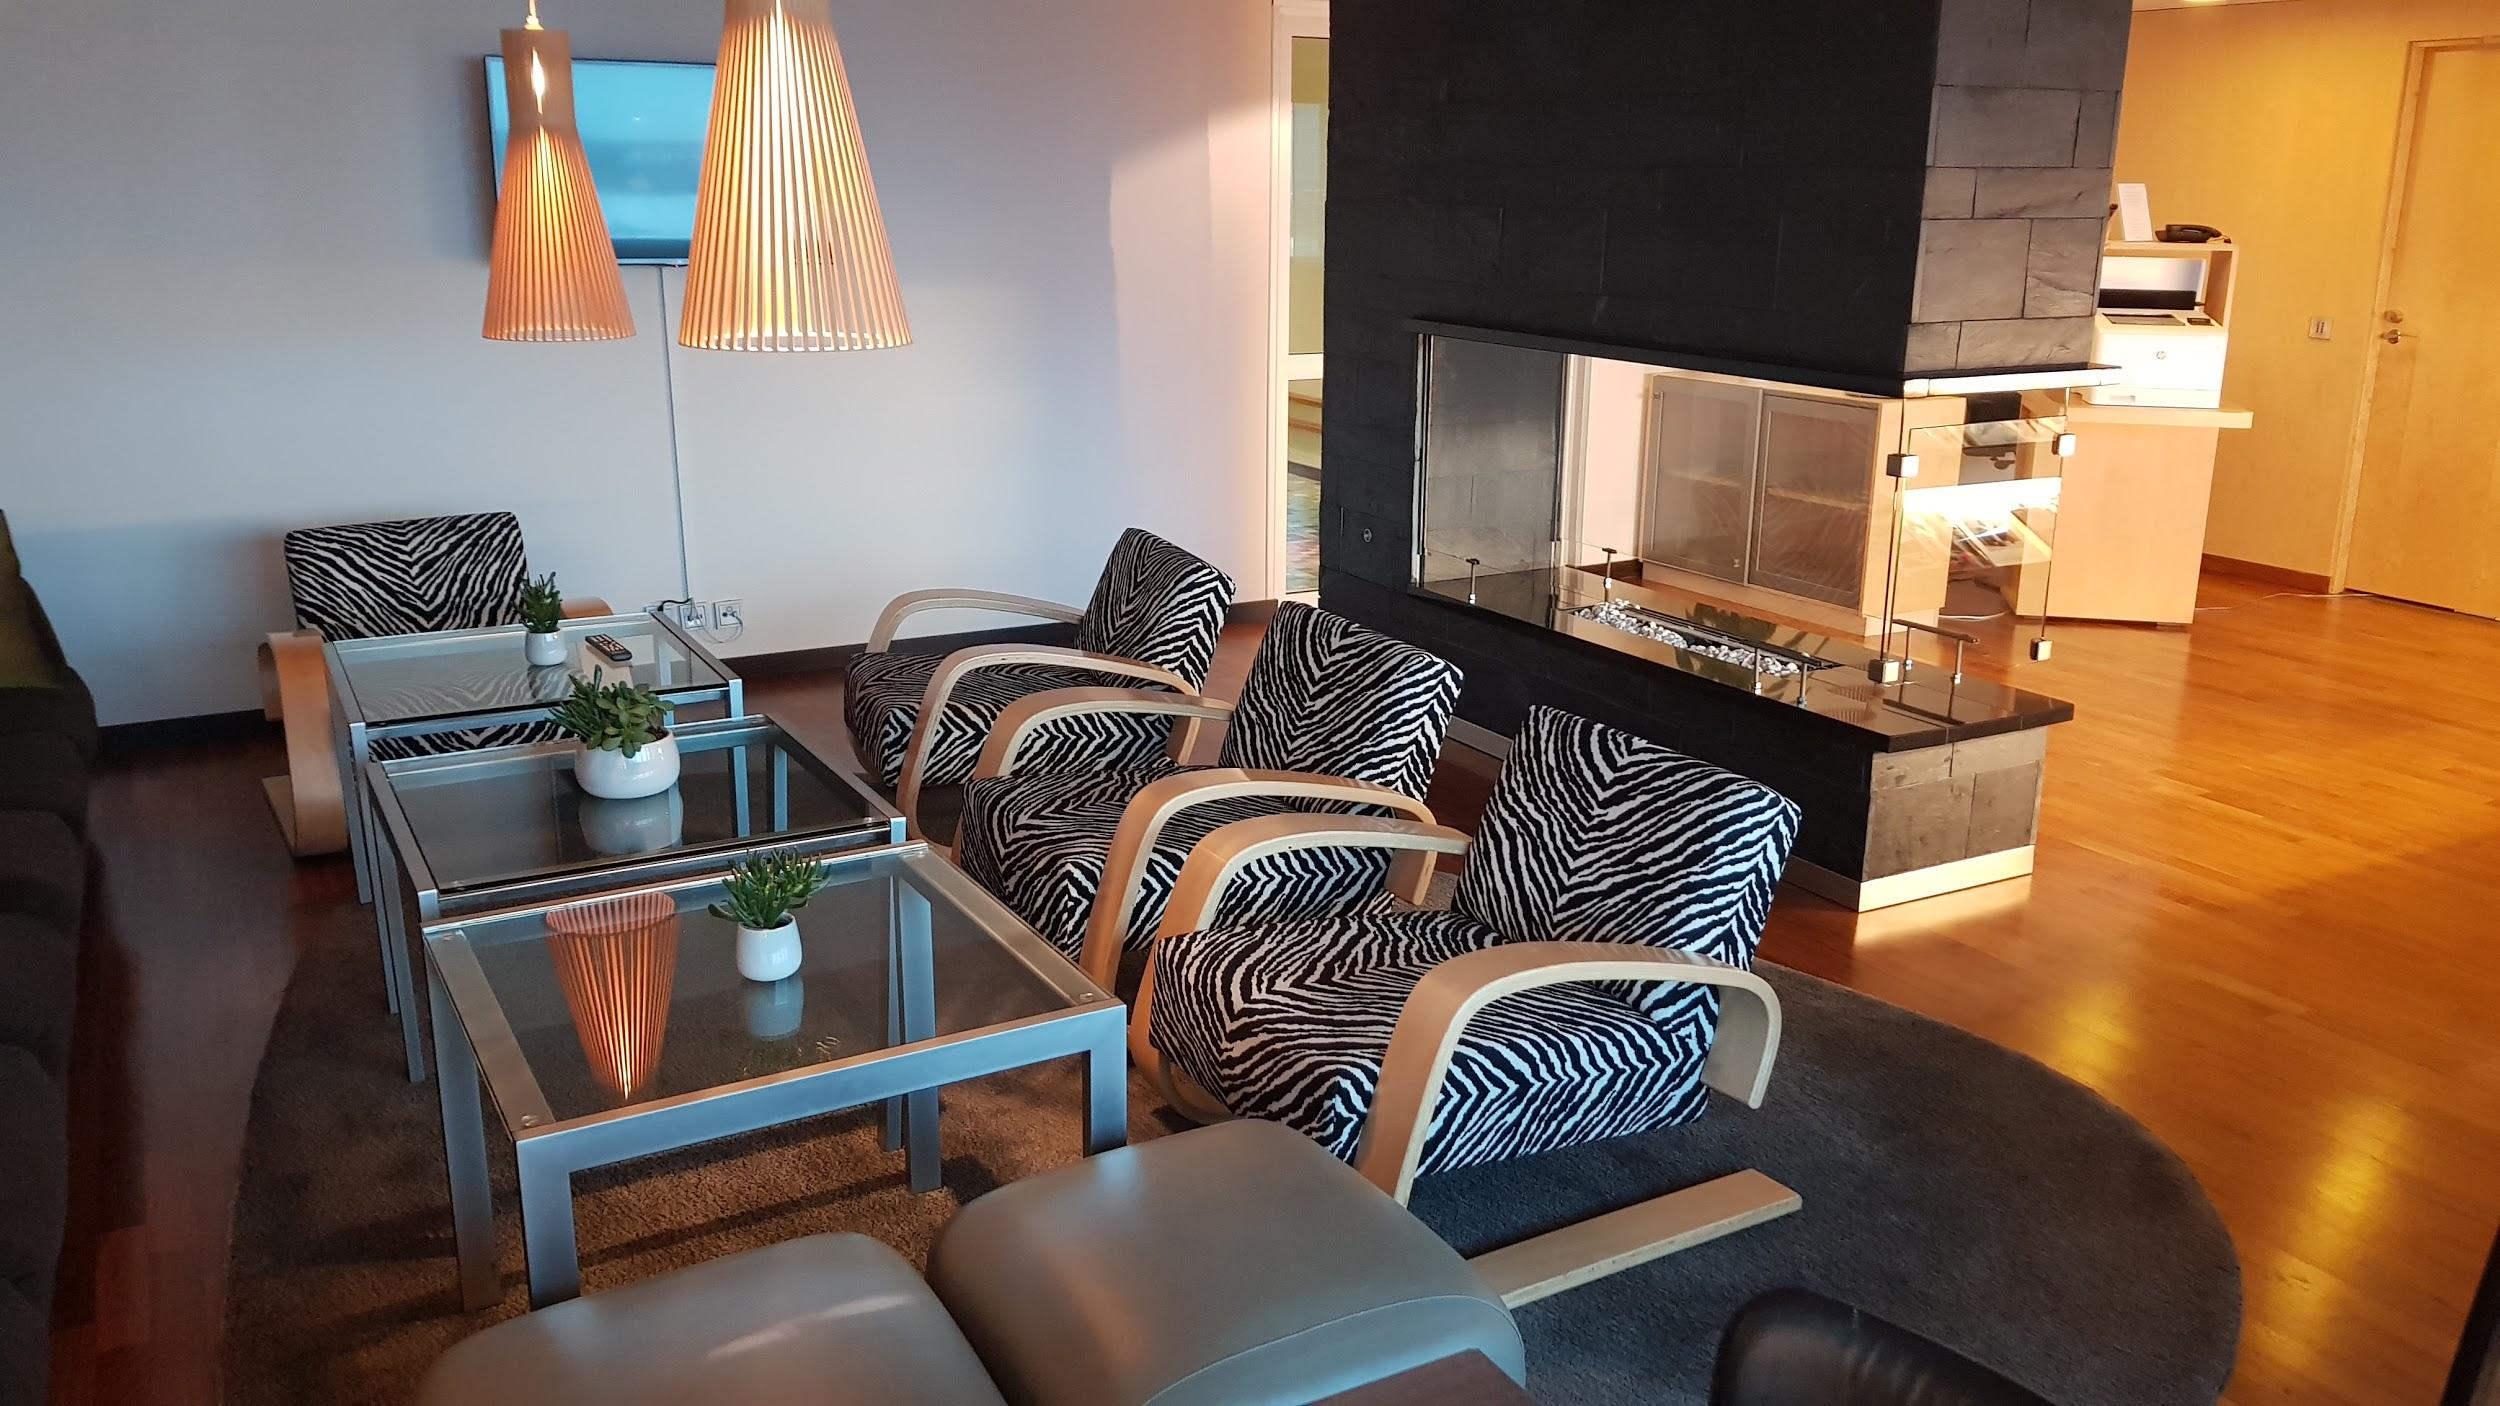 Hilton Helsinki Airport Executive Club Lounge | Point Hacks